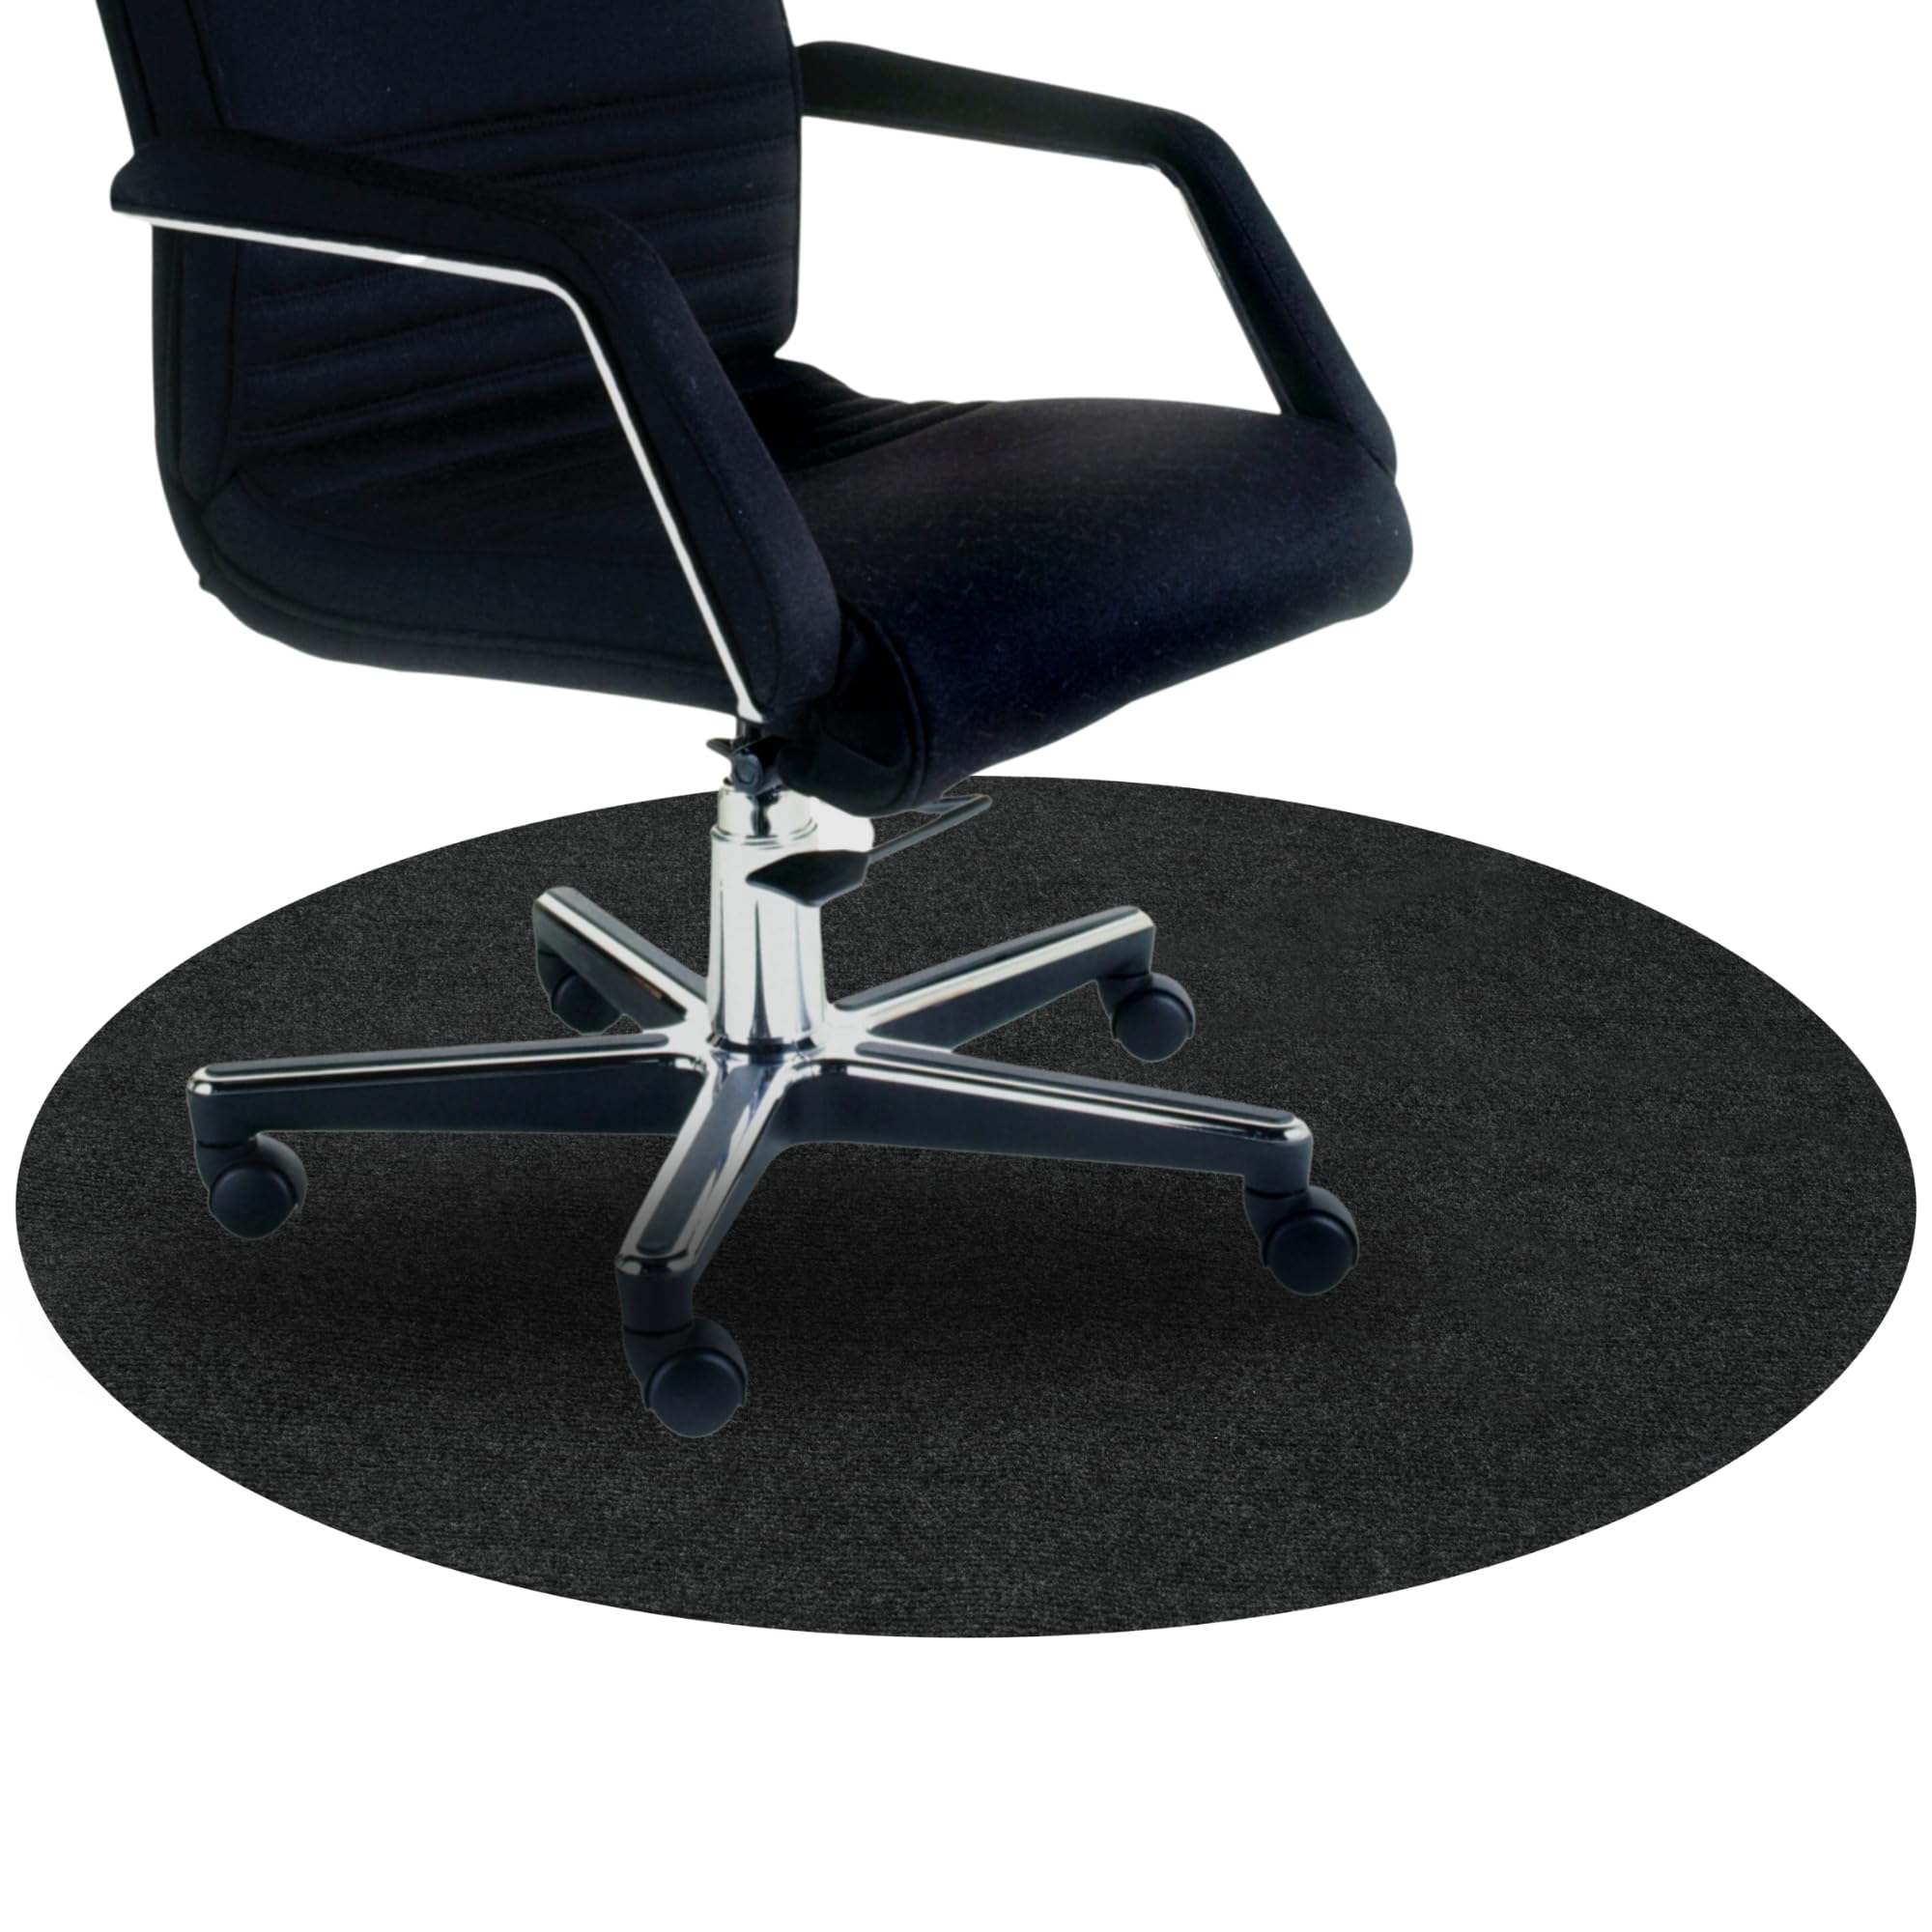 Office Chair Mat for Hardwood Floor (Or Tile Floor), Desk Chair Mat with Rubber Anti-Slip Back, Easy to Clean (39.4 Inch Diameter)